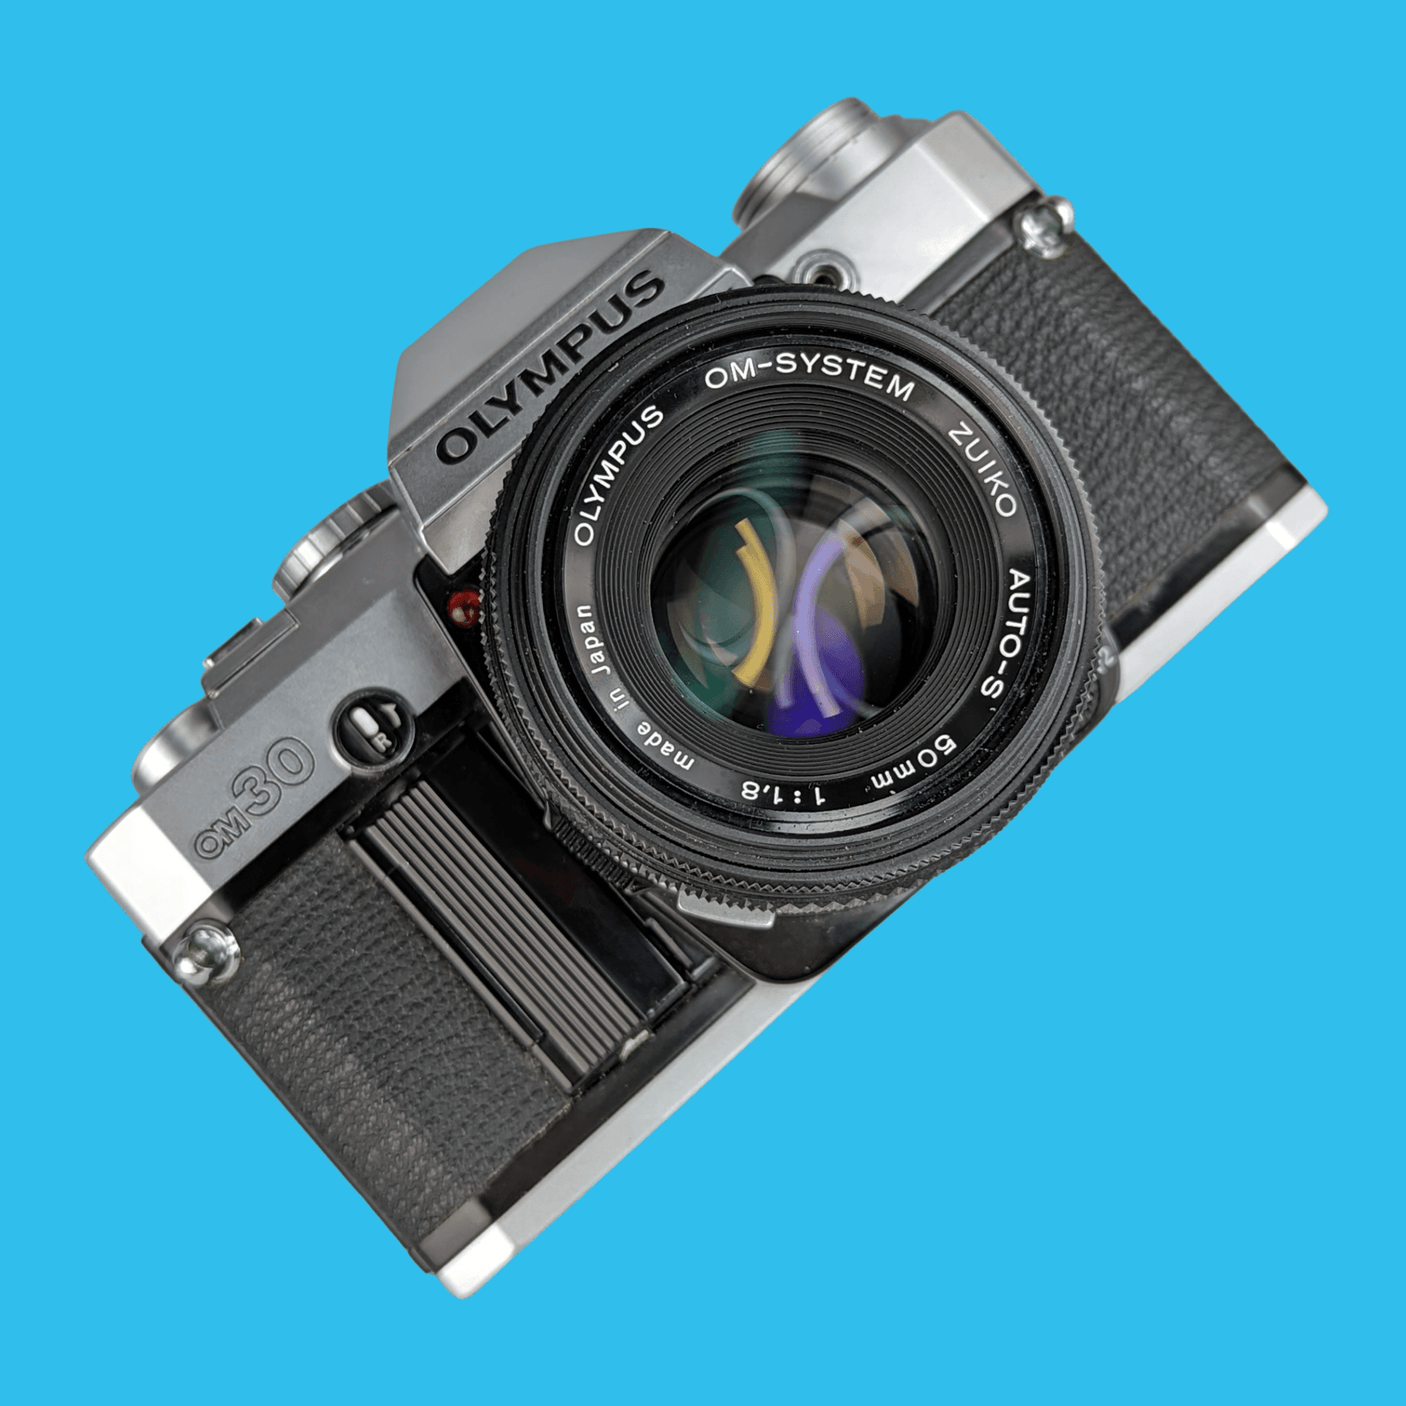 Olympus OM 30 35mm SLR Film Camera with Original Olympus 50mm Prime Lens